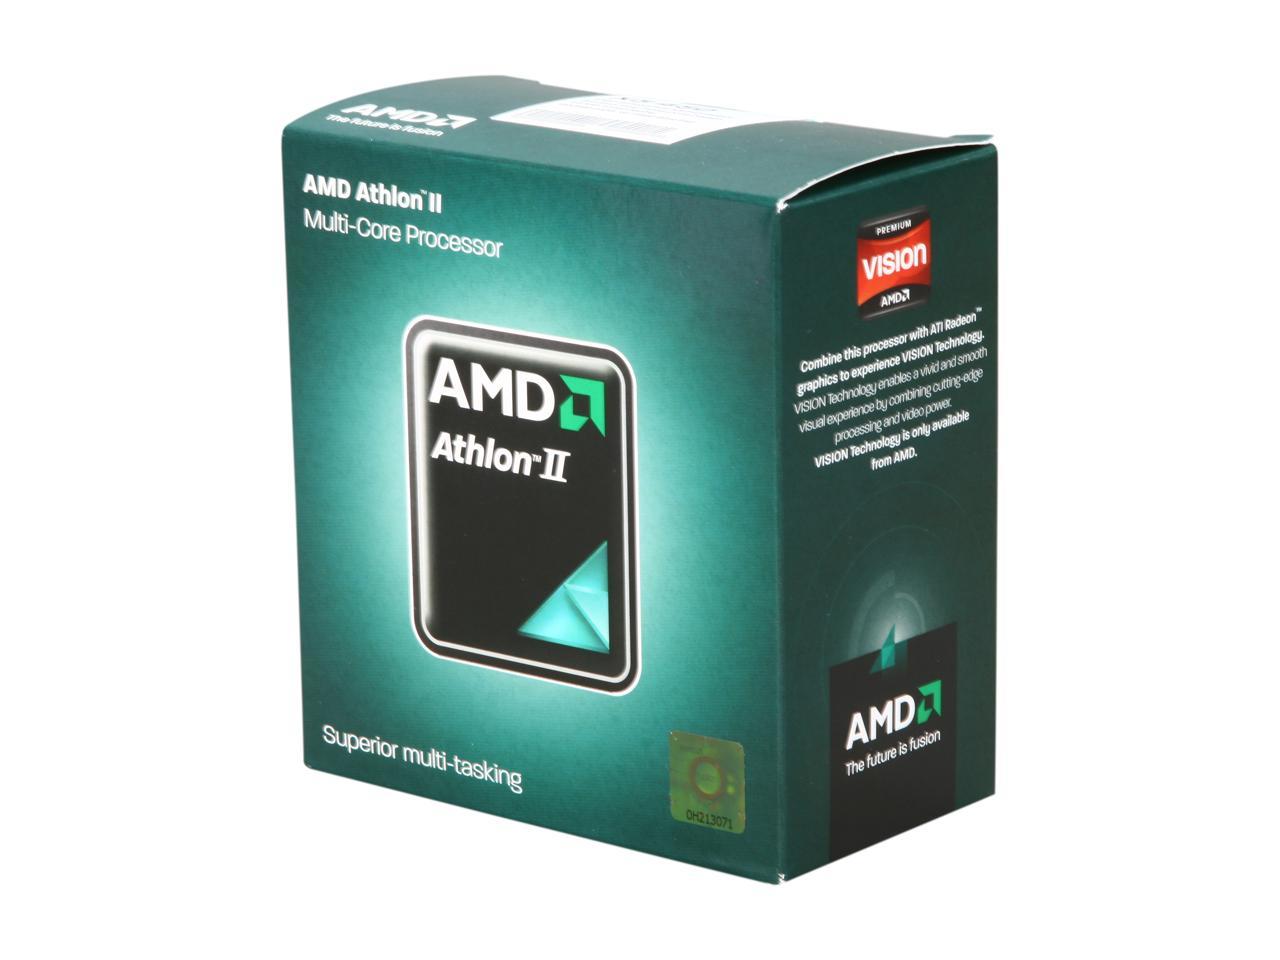 AMD Athlon II X3 450 Rana Triple-Core 3.2 GHz Socket AM3 95W ADX450WFGMBOX Desktop Processor